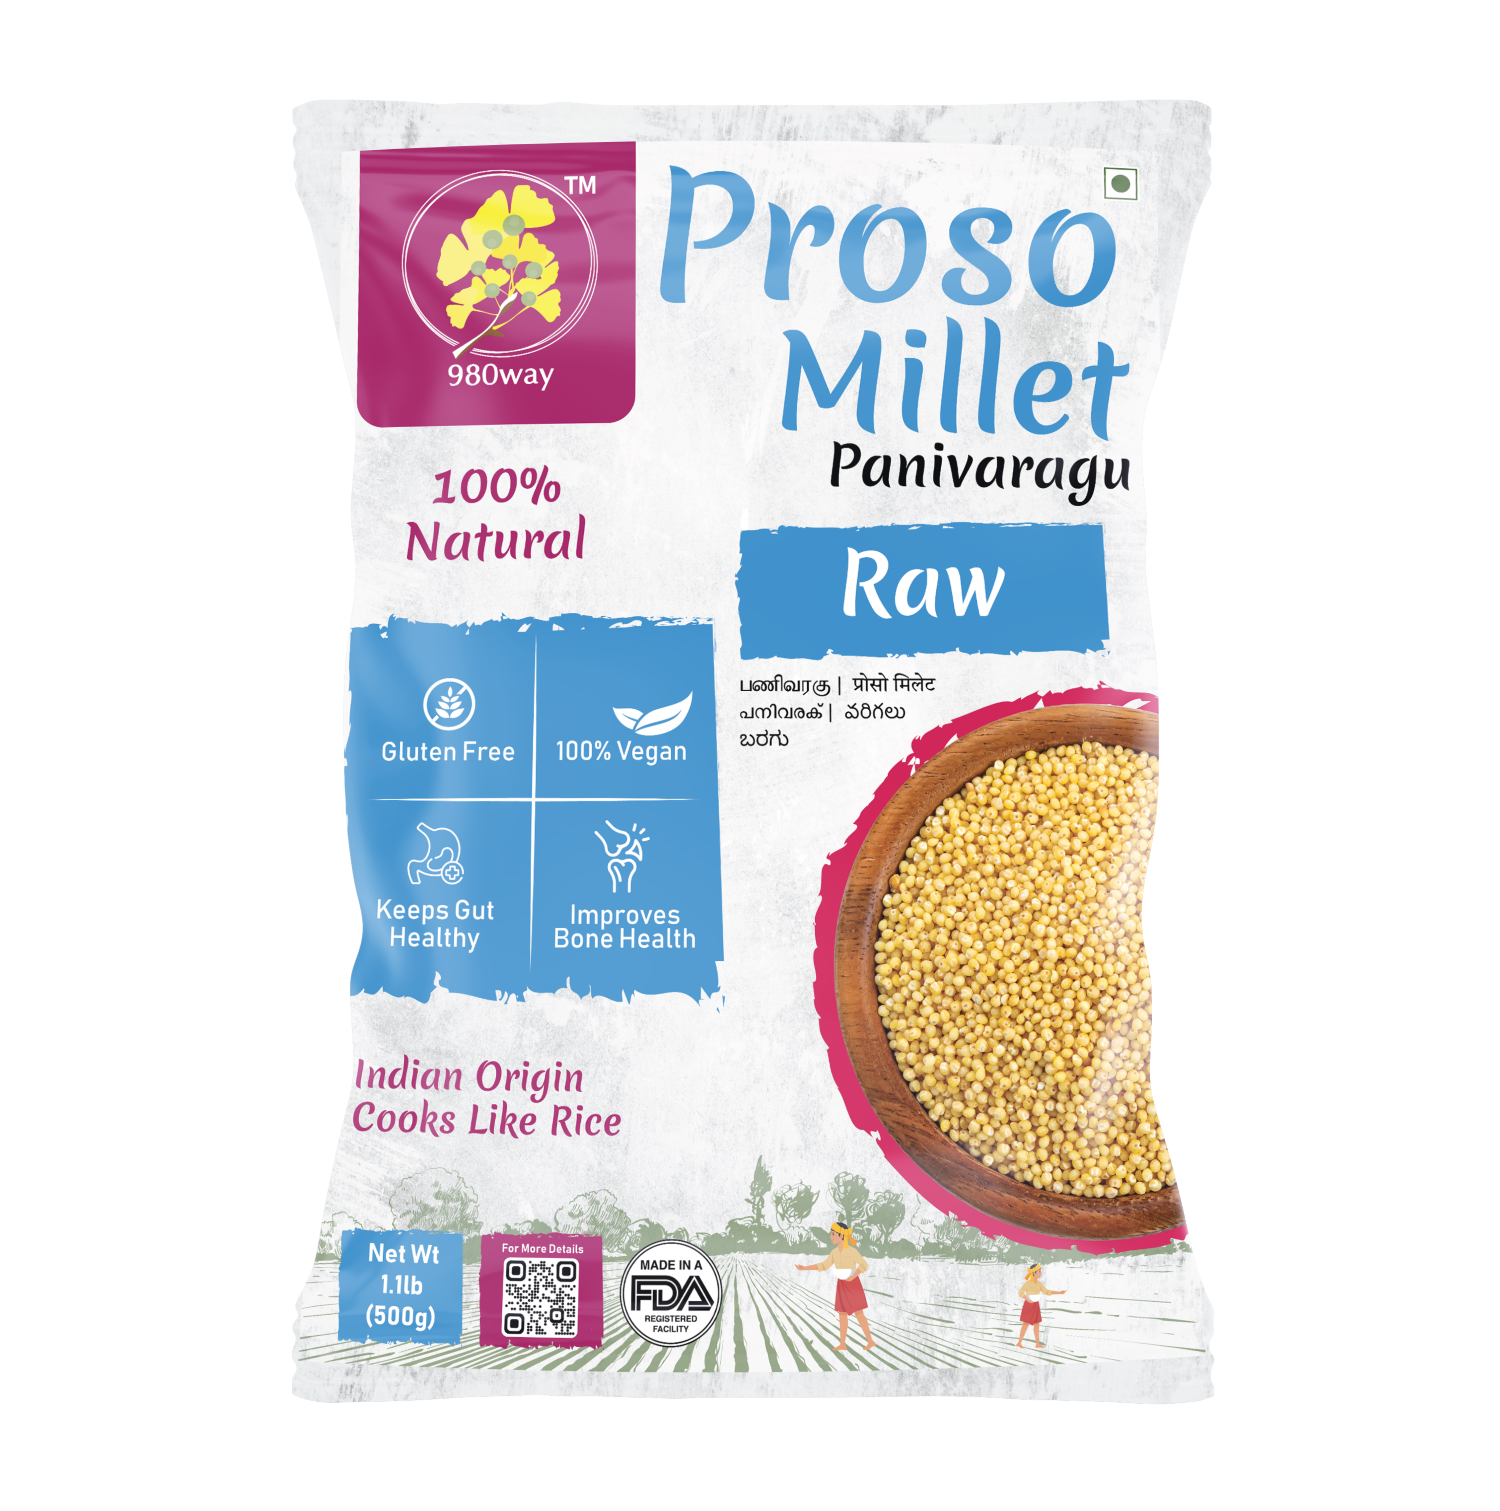 Proso (Panivaragu) Millet